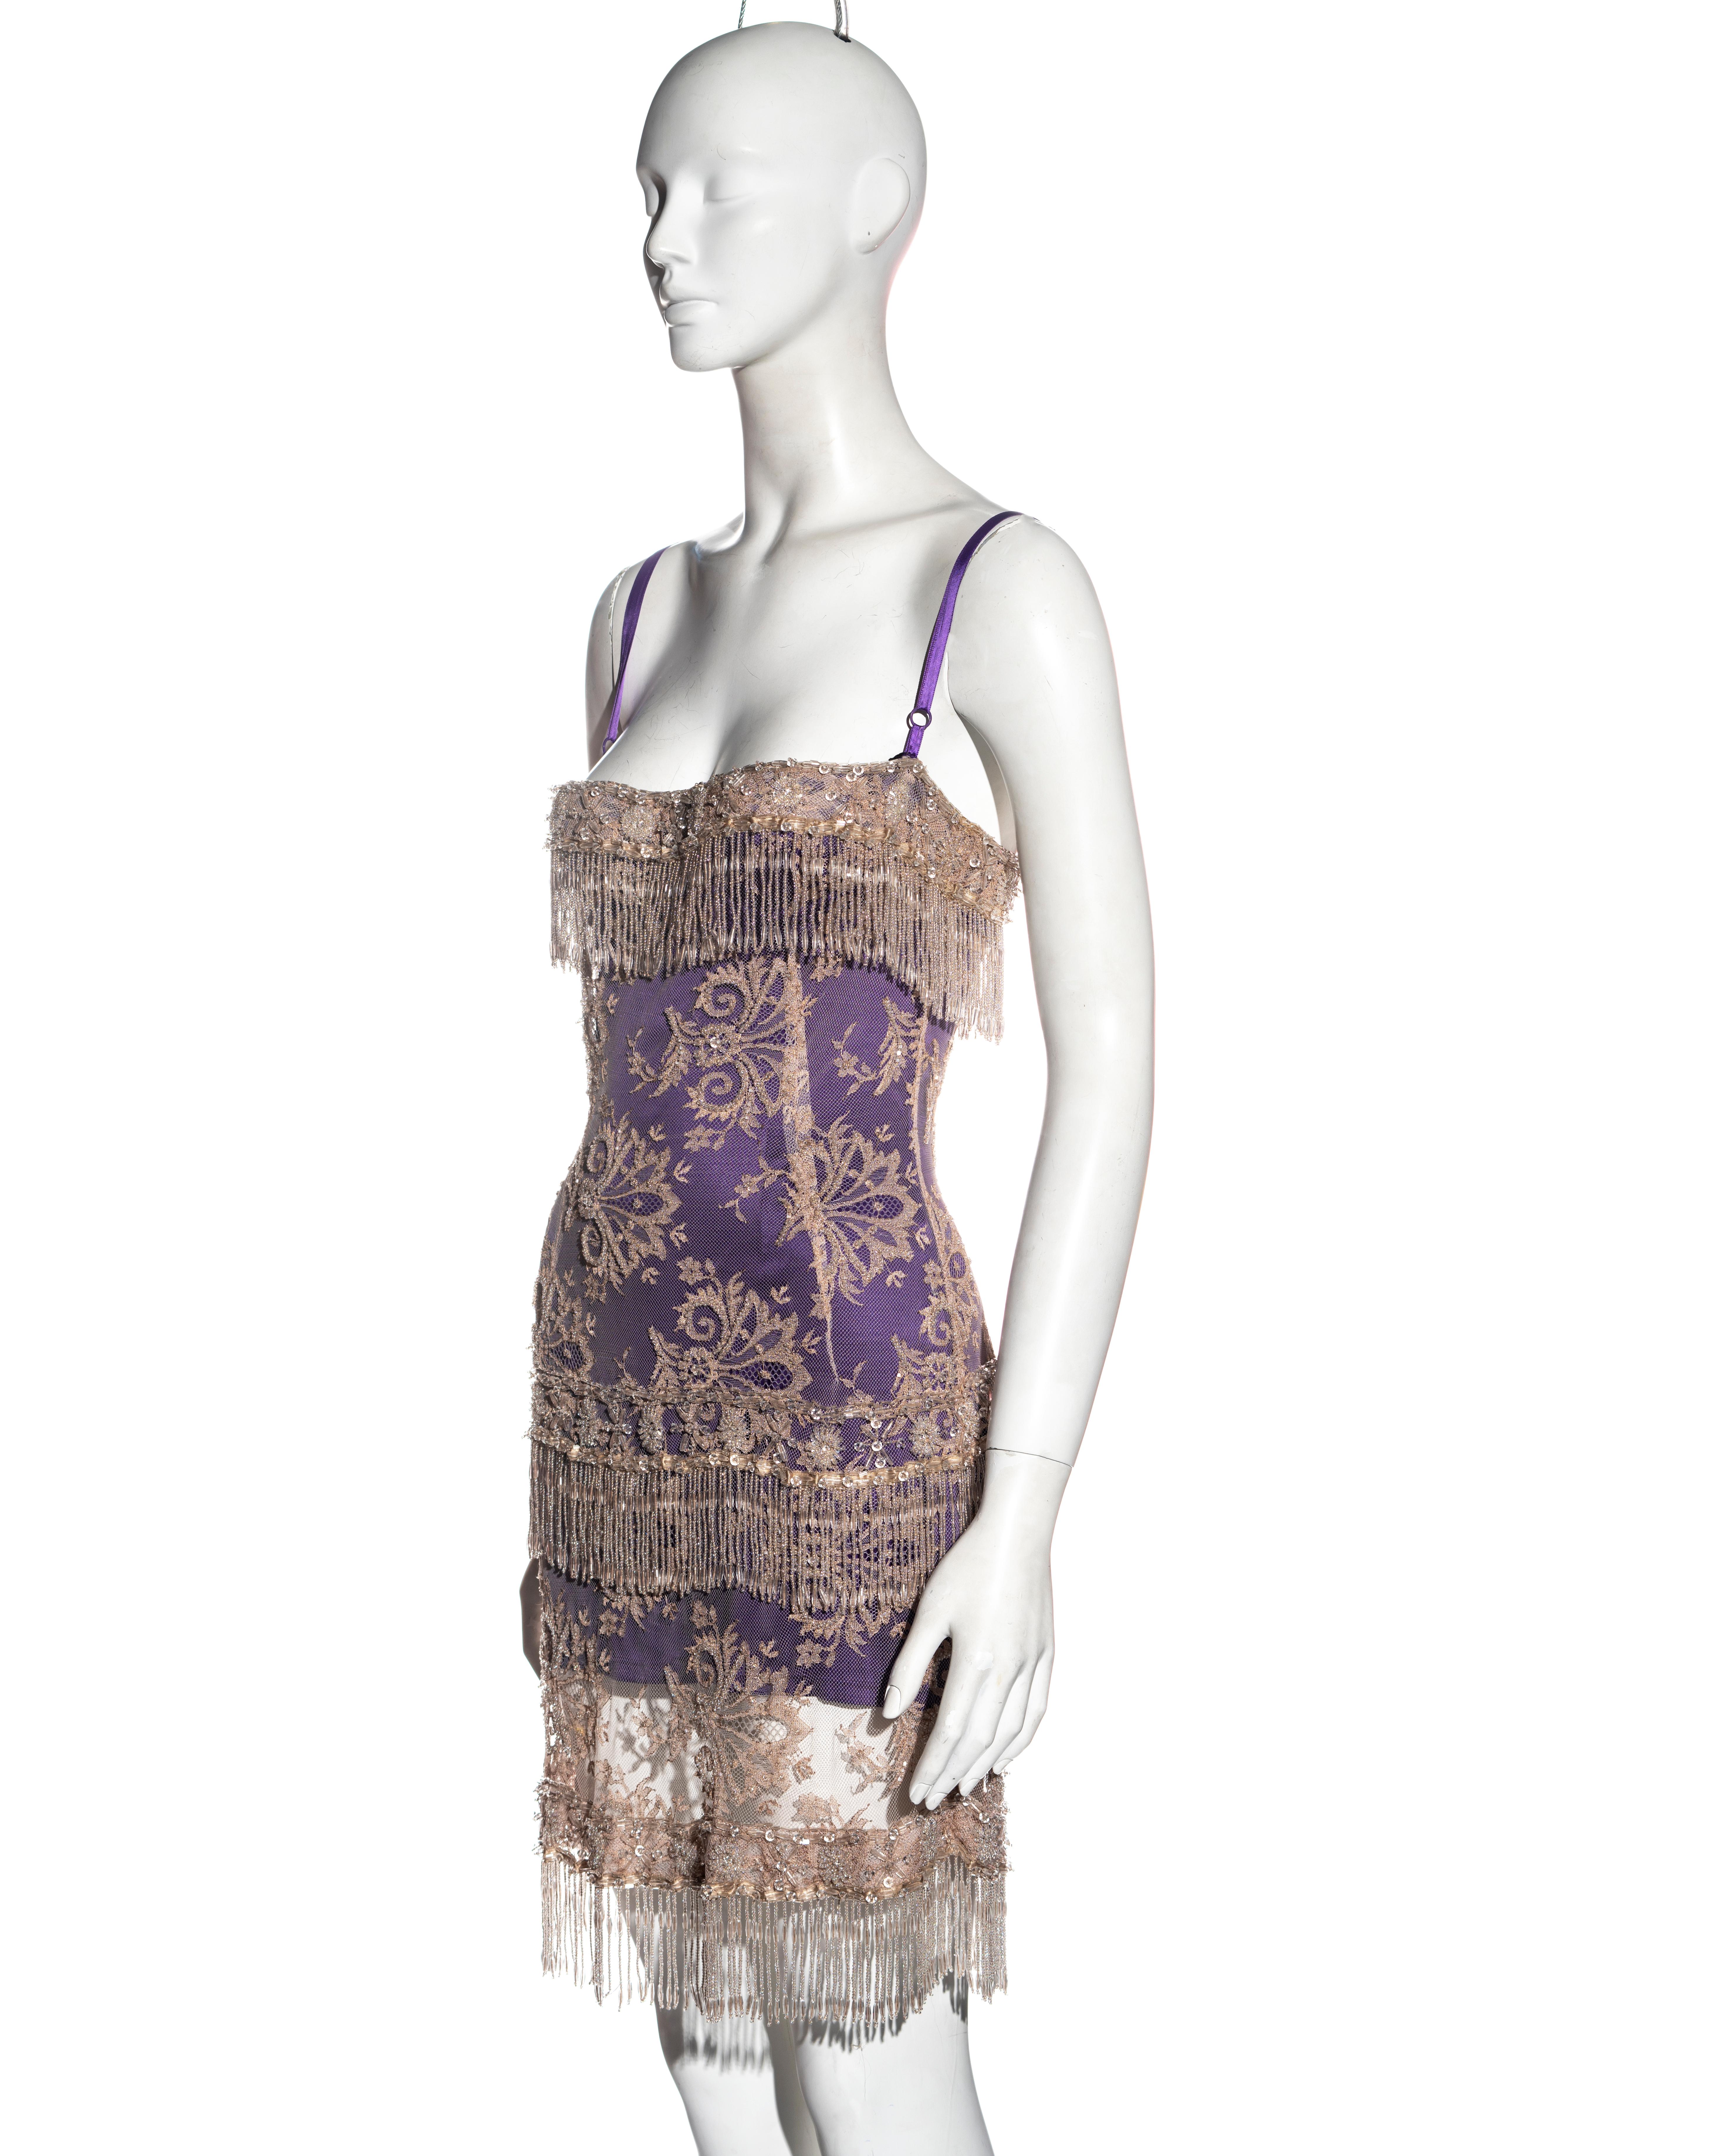 Dolce & Gabbana nude beaded lace mini dress, ss 2000 1